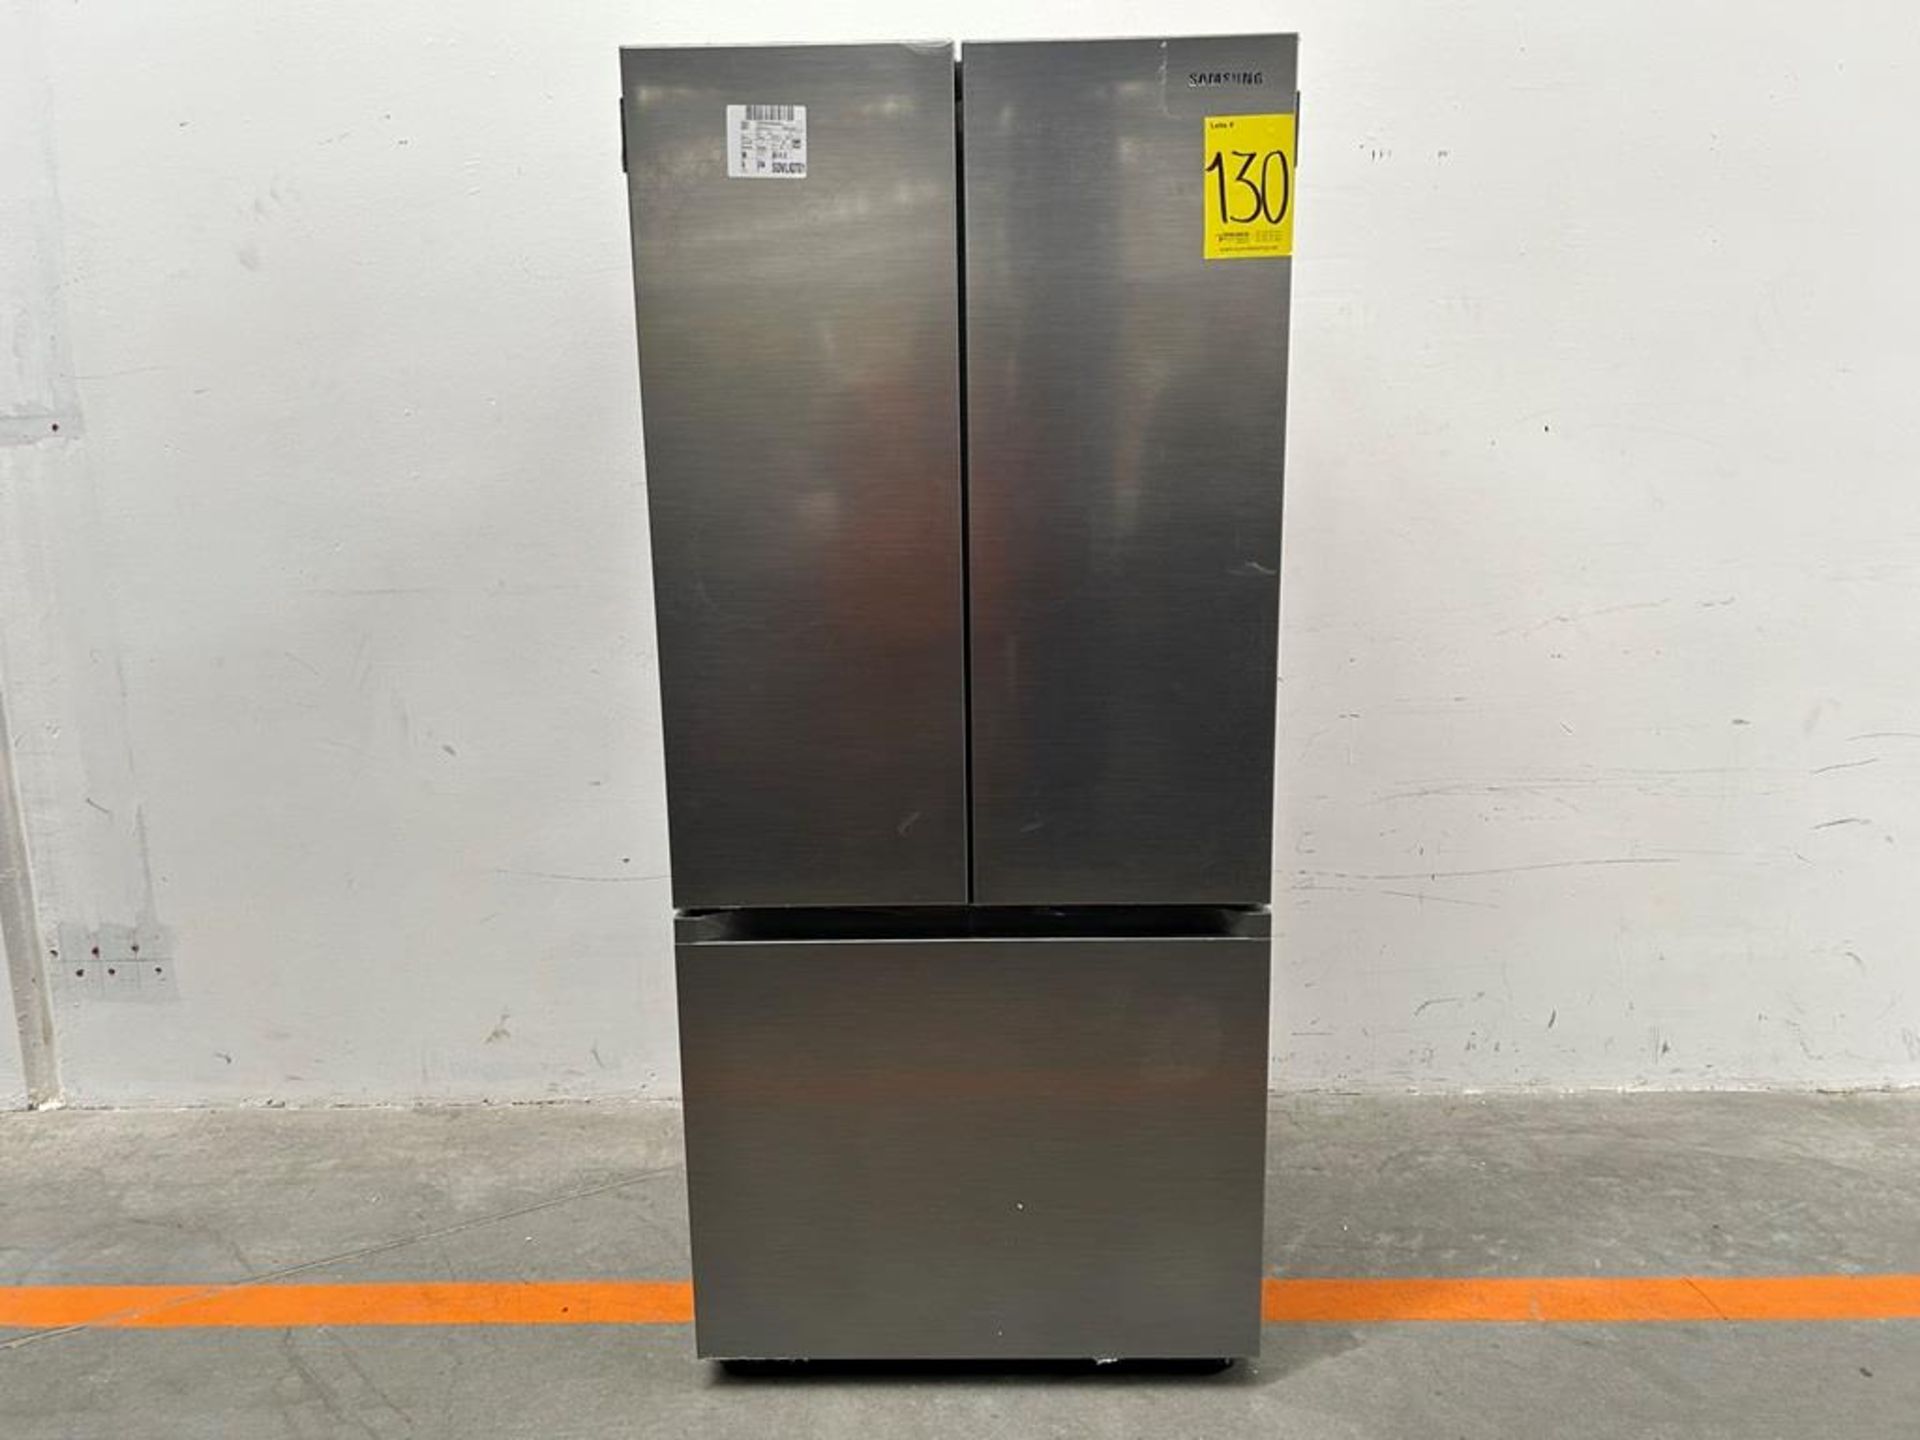 (NUEVO) Refrigerador Marca SAMSUNG, Modelo RF22A4010S9, Serie 00216L, Color GRIS